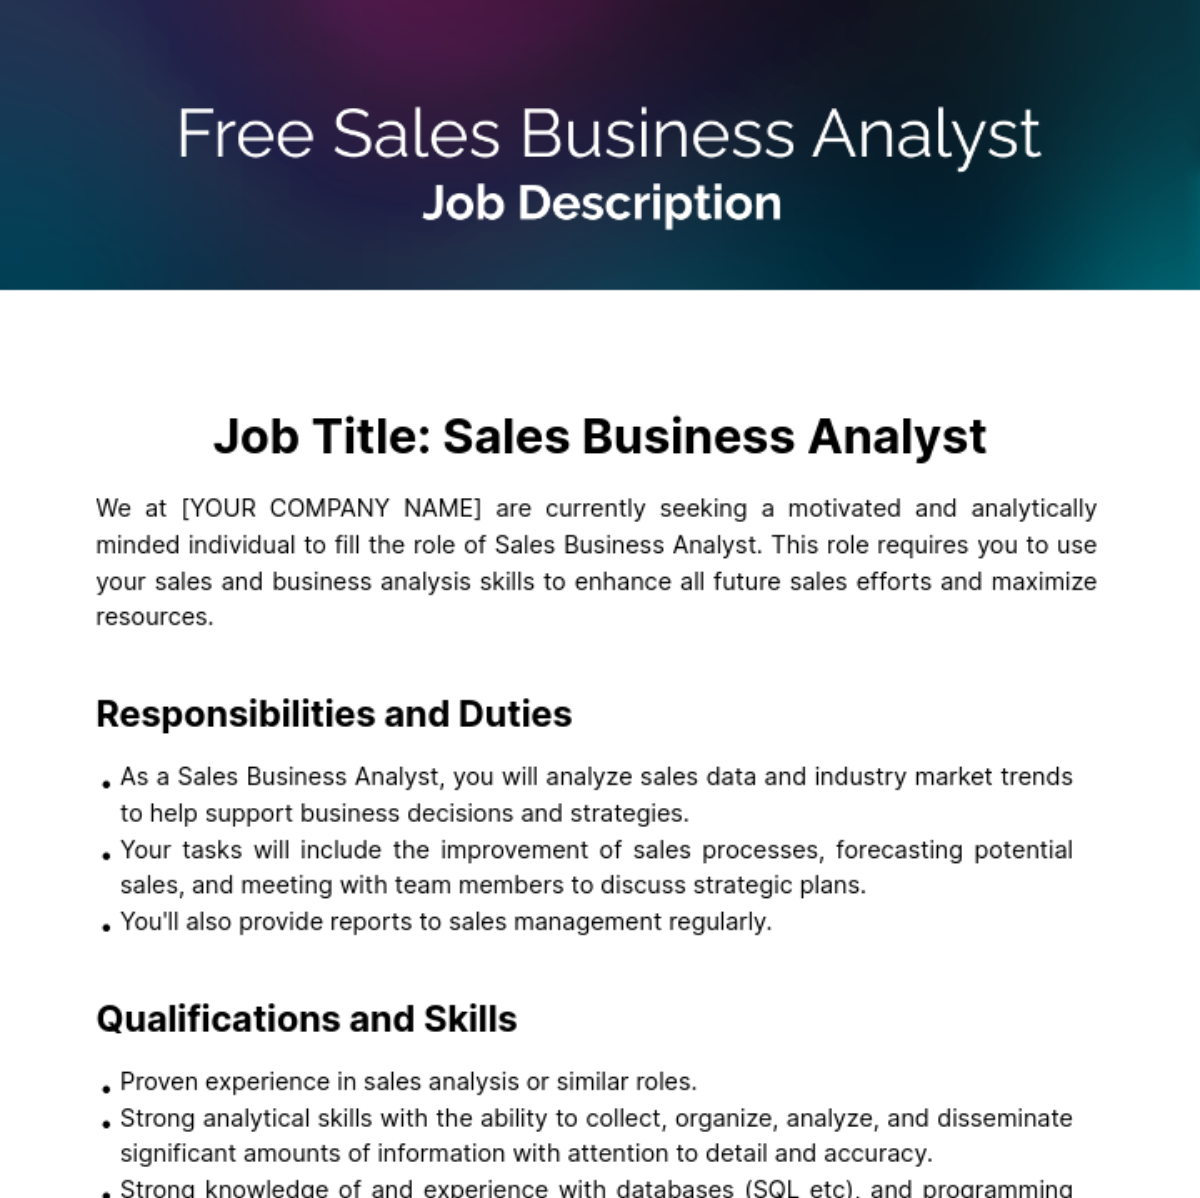 Free Sales Business Analyst Job Description Template